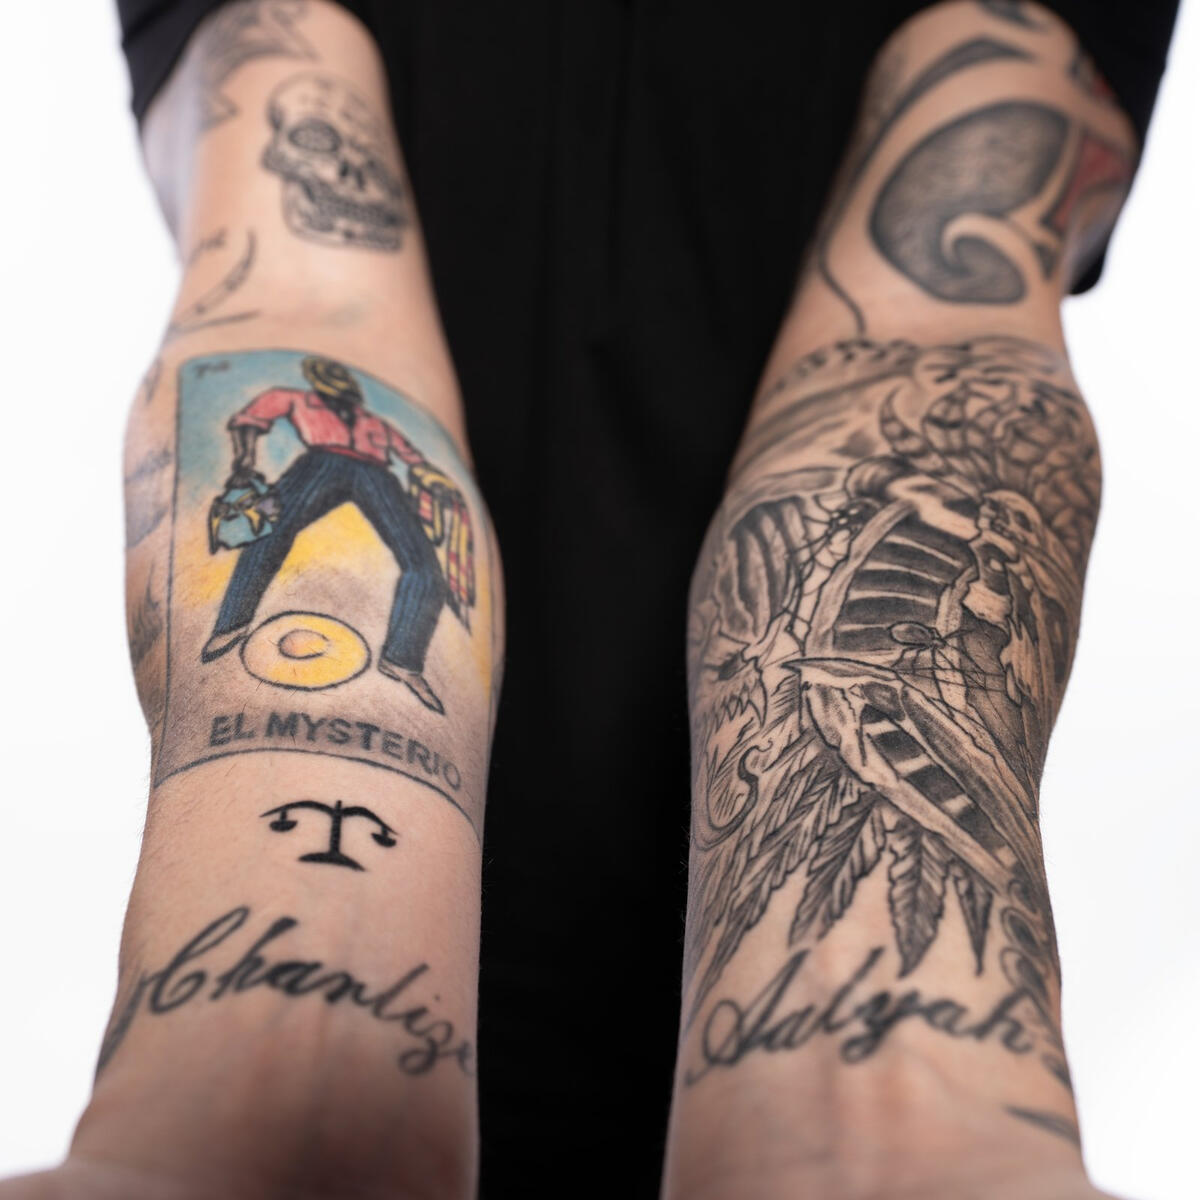 Dominik Mysterio shows off his new tattoo